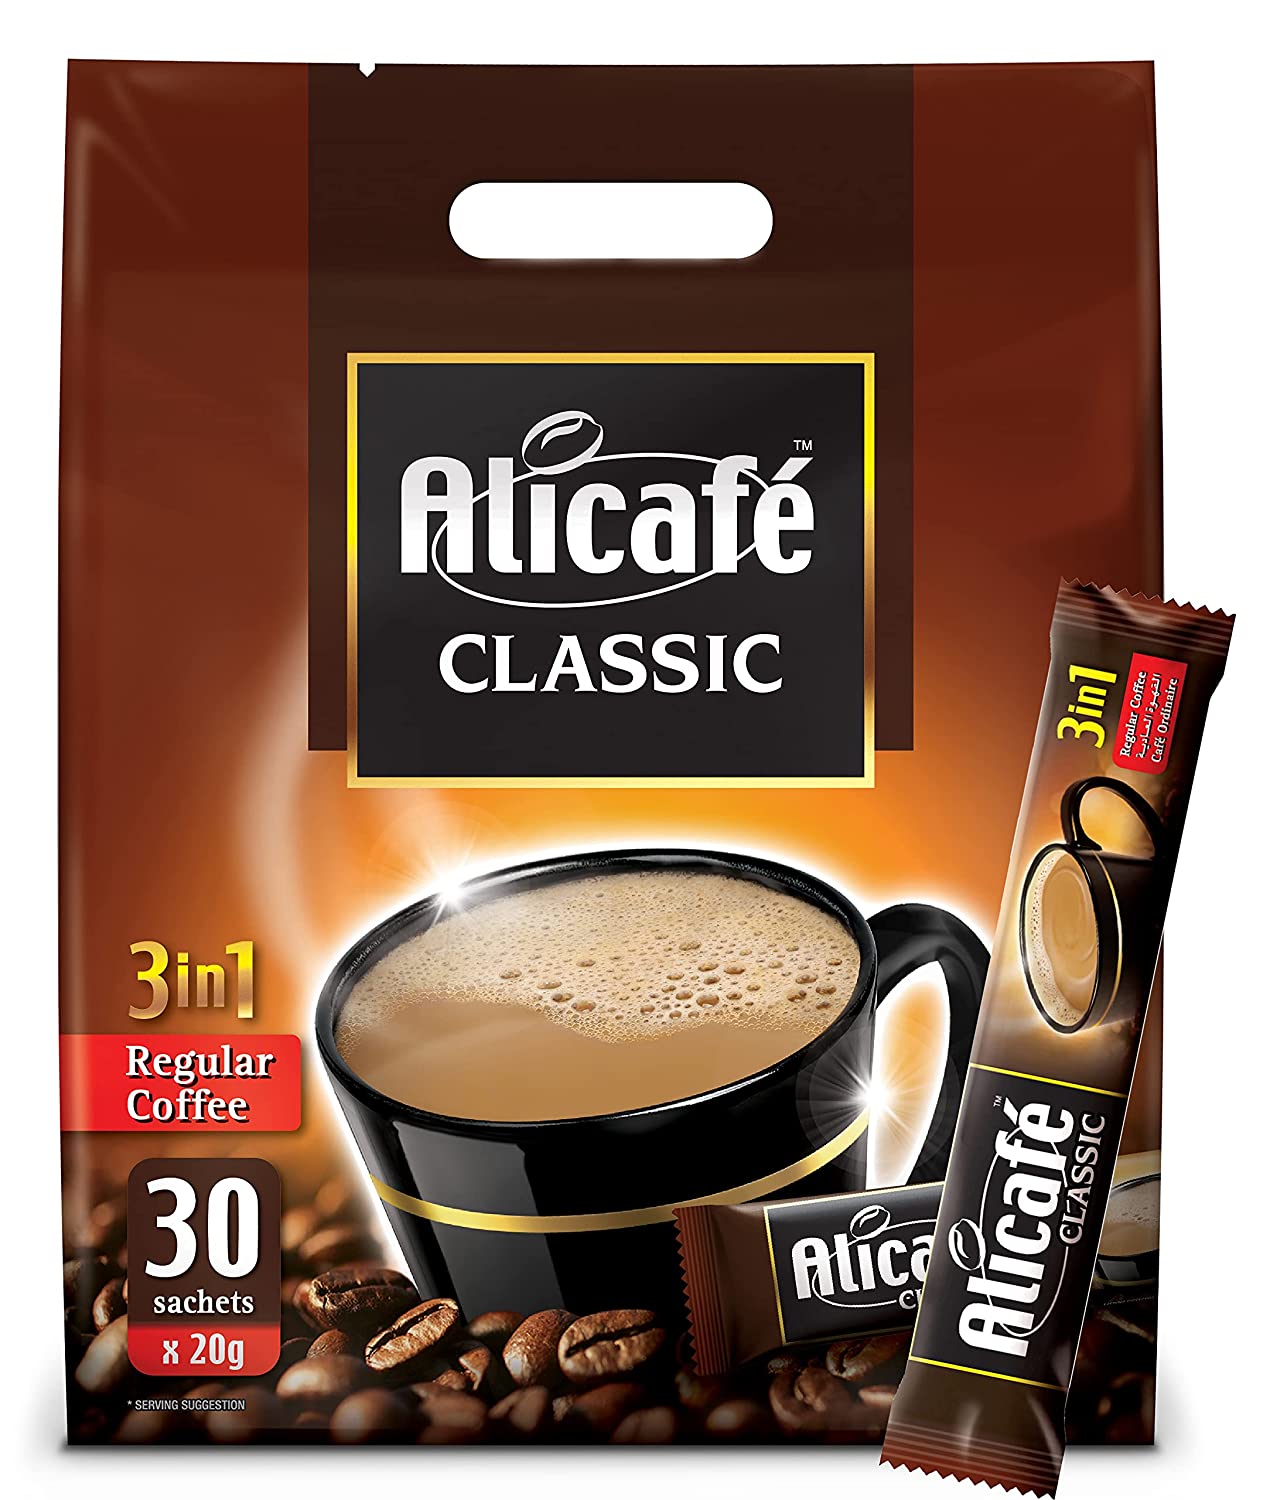 Alicafe Classic Regular Coffee Image